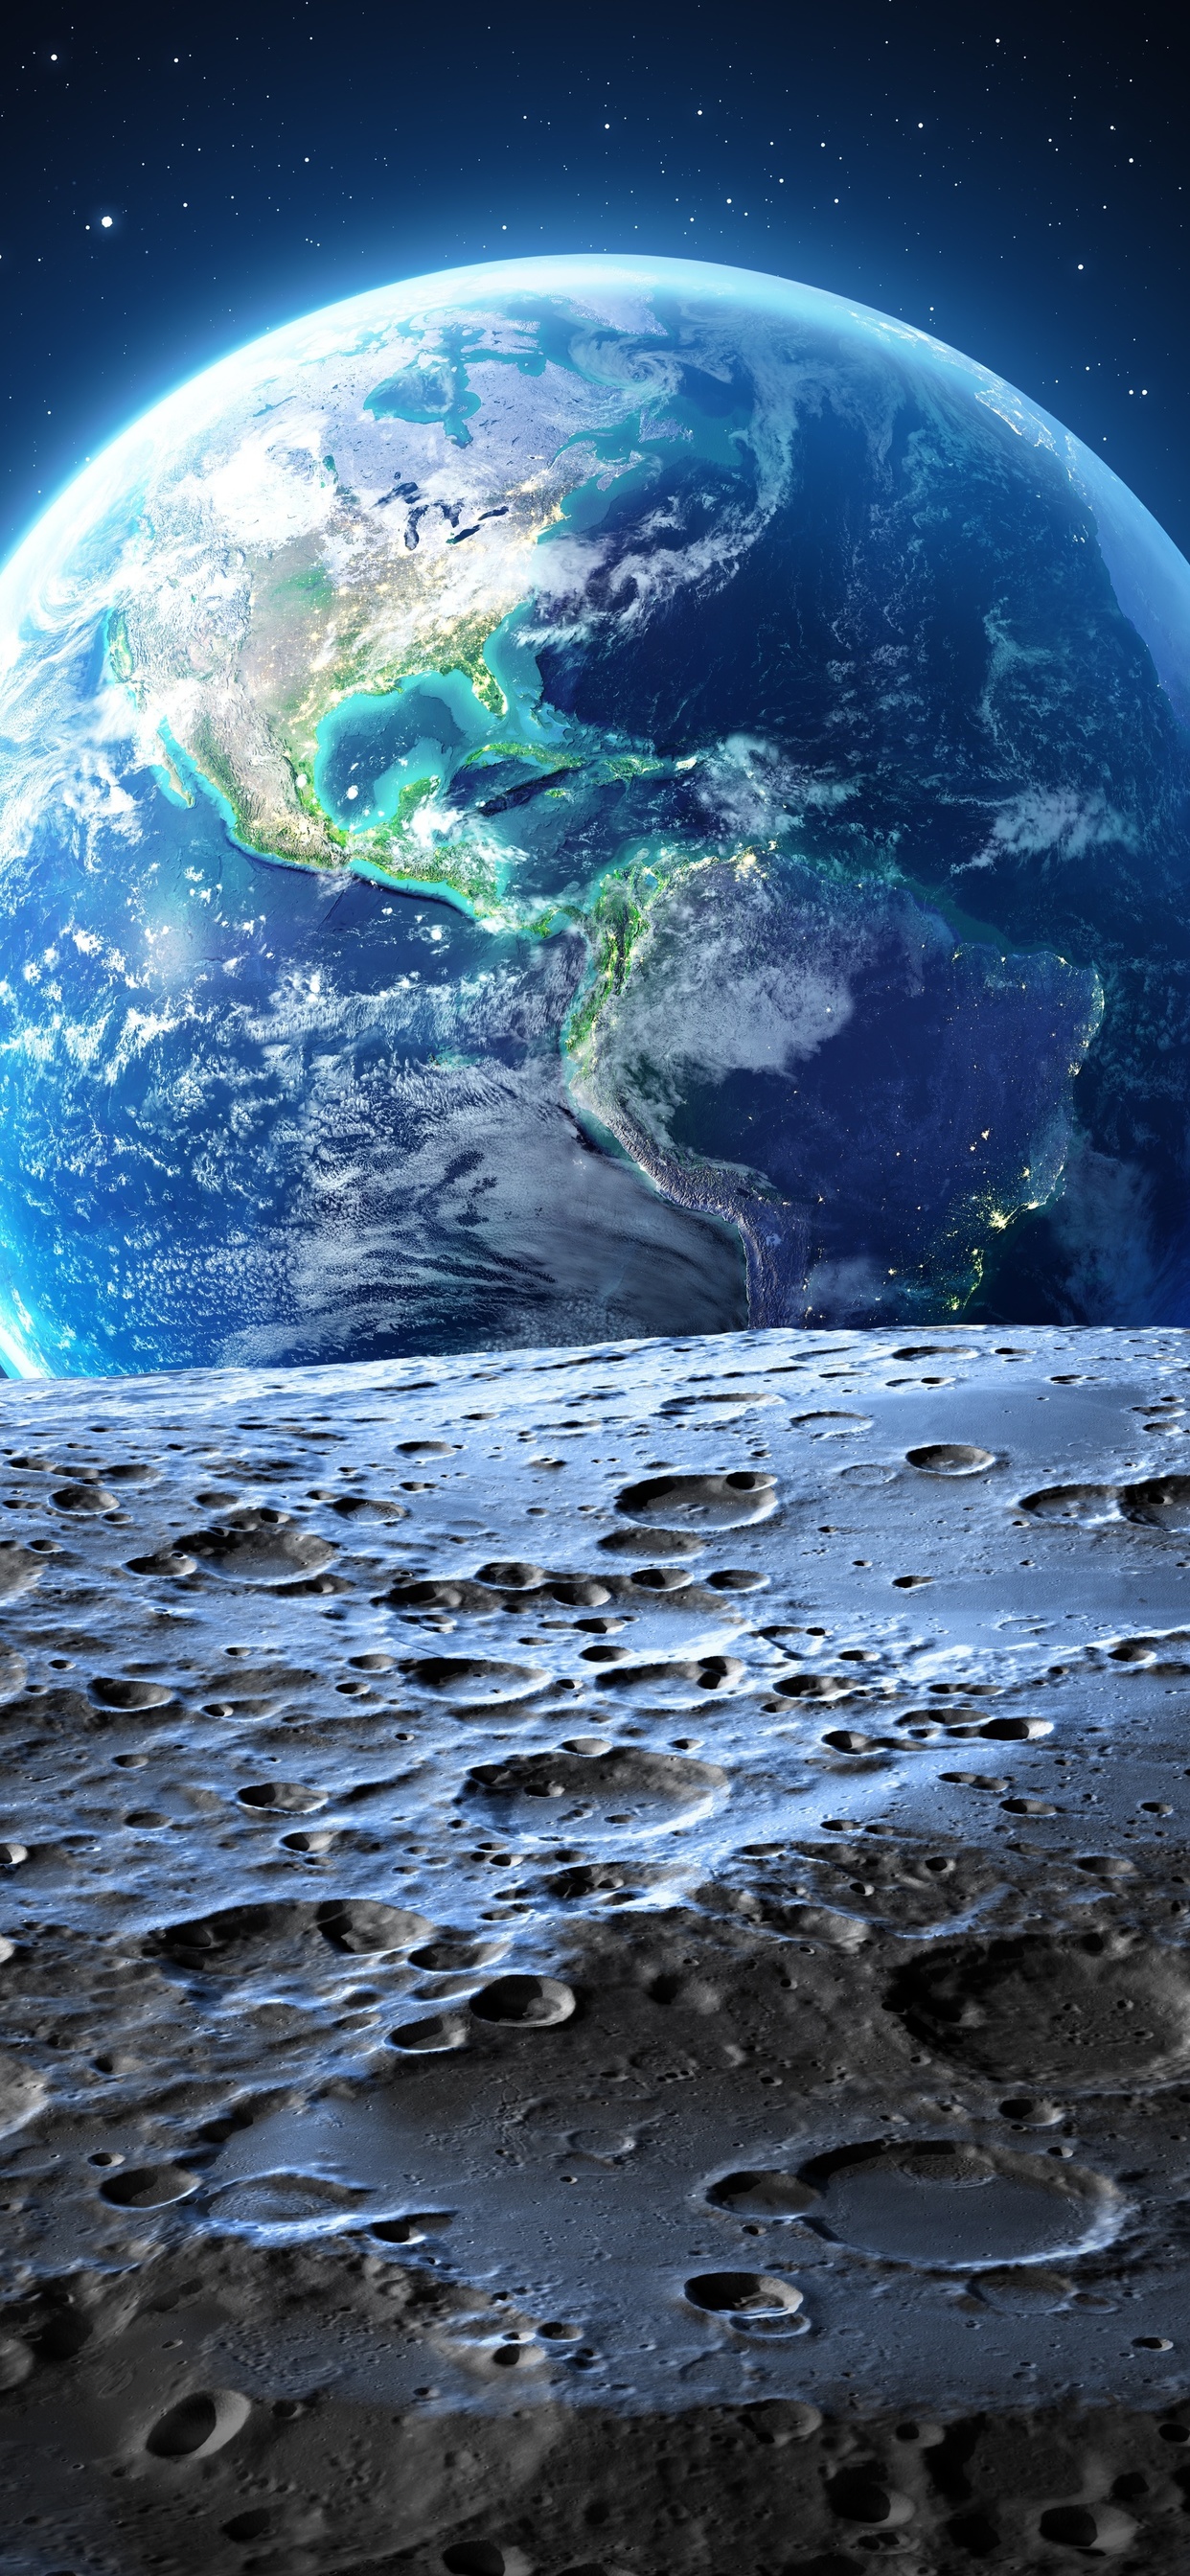 Earth Moon 4k wallpapers